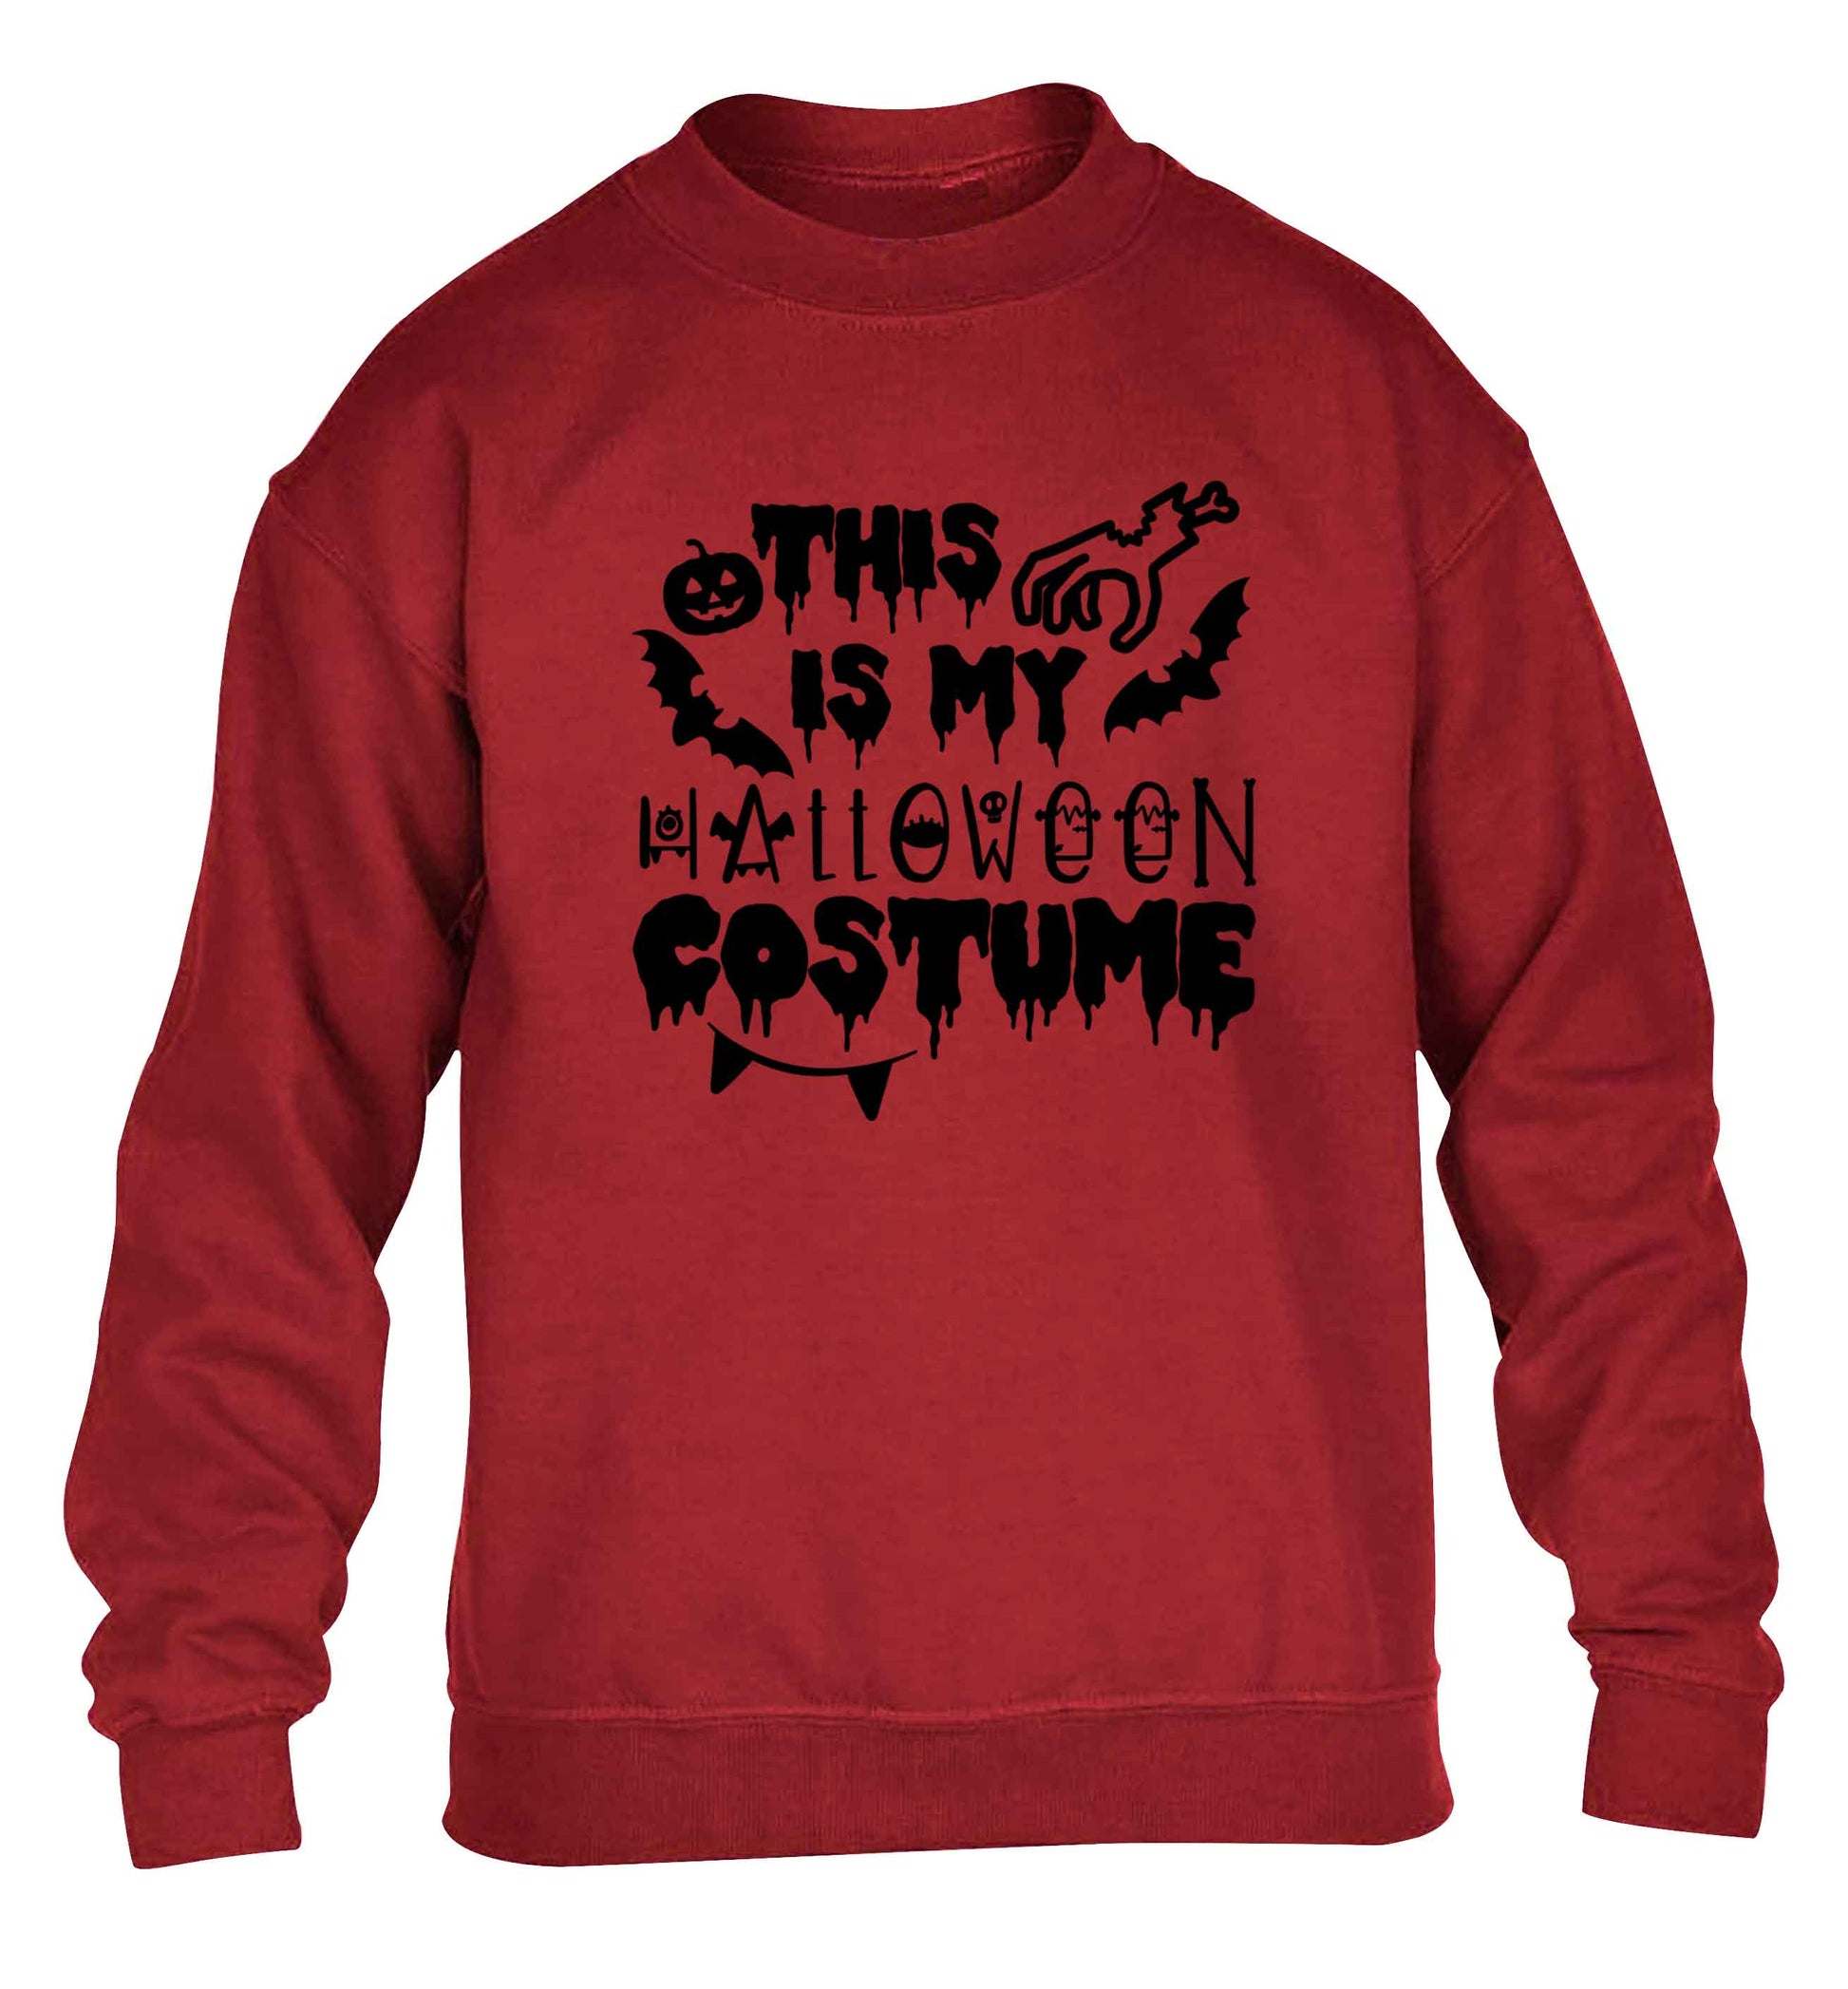 This is my halloween costume children's grey sweater 12-13 Years